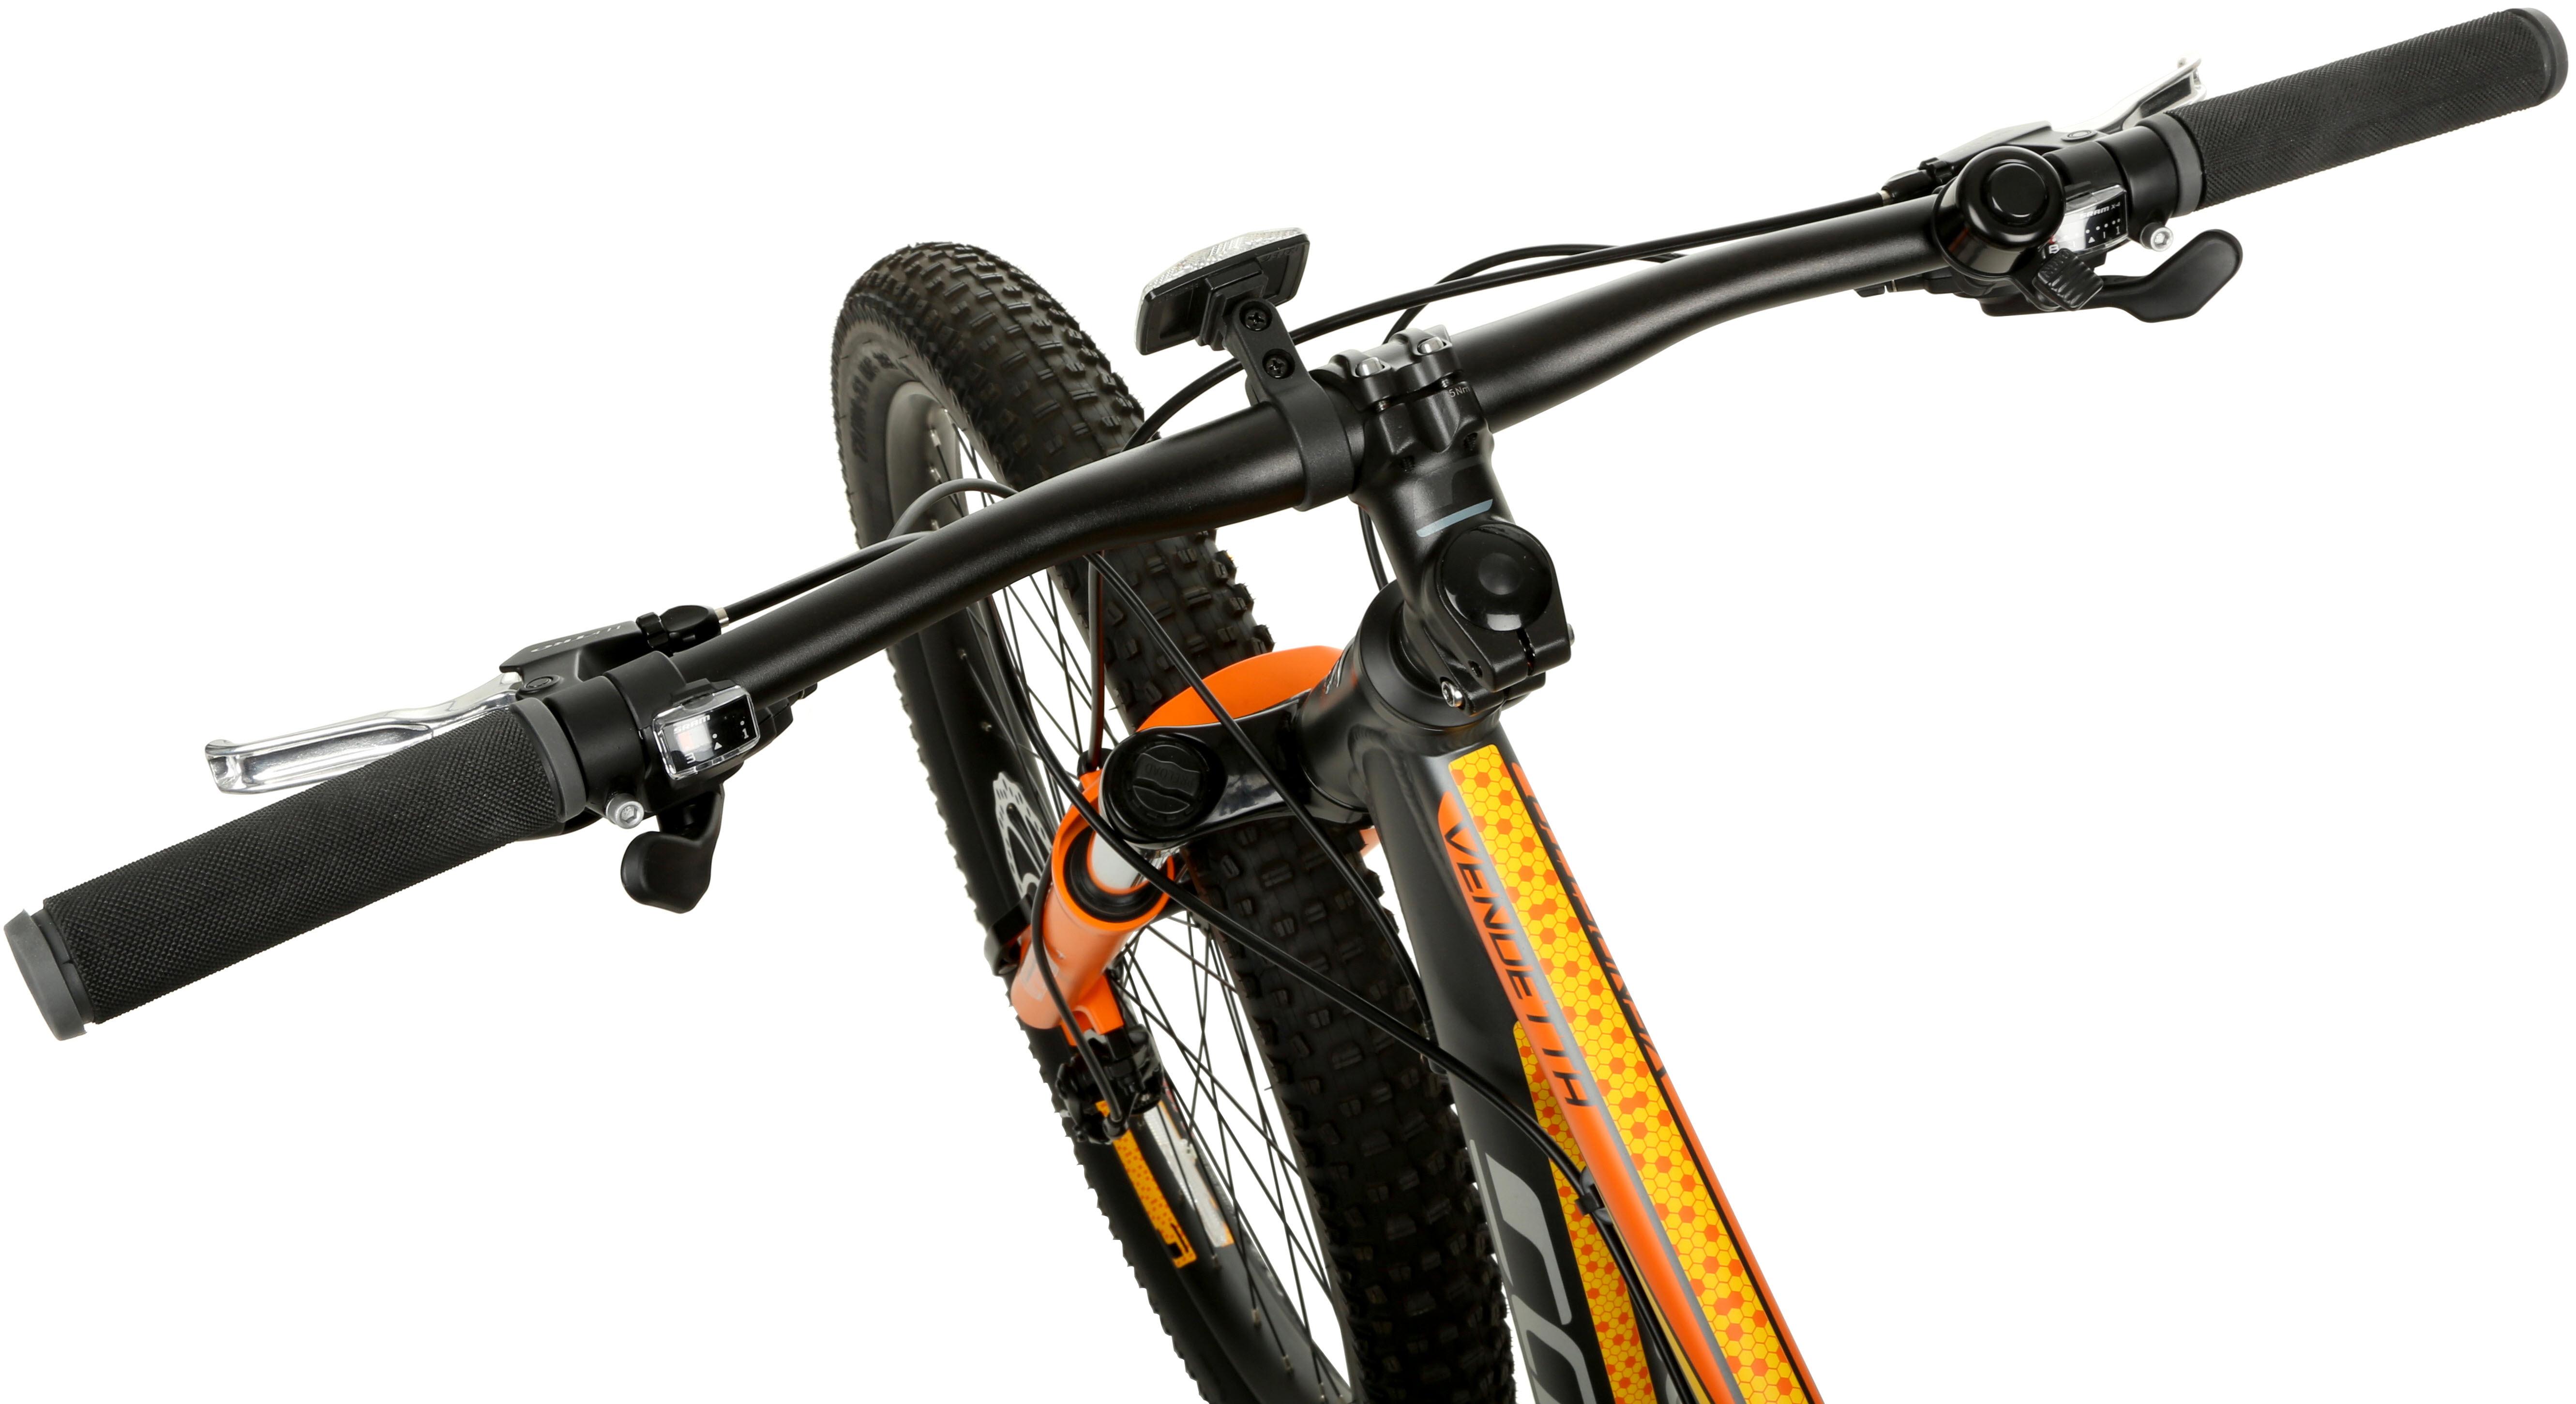 orange carrera mountain bike